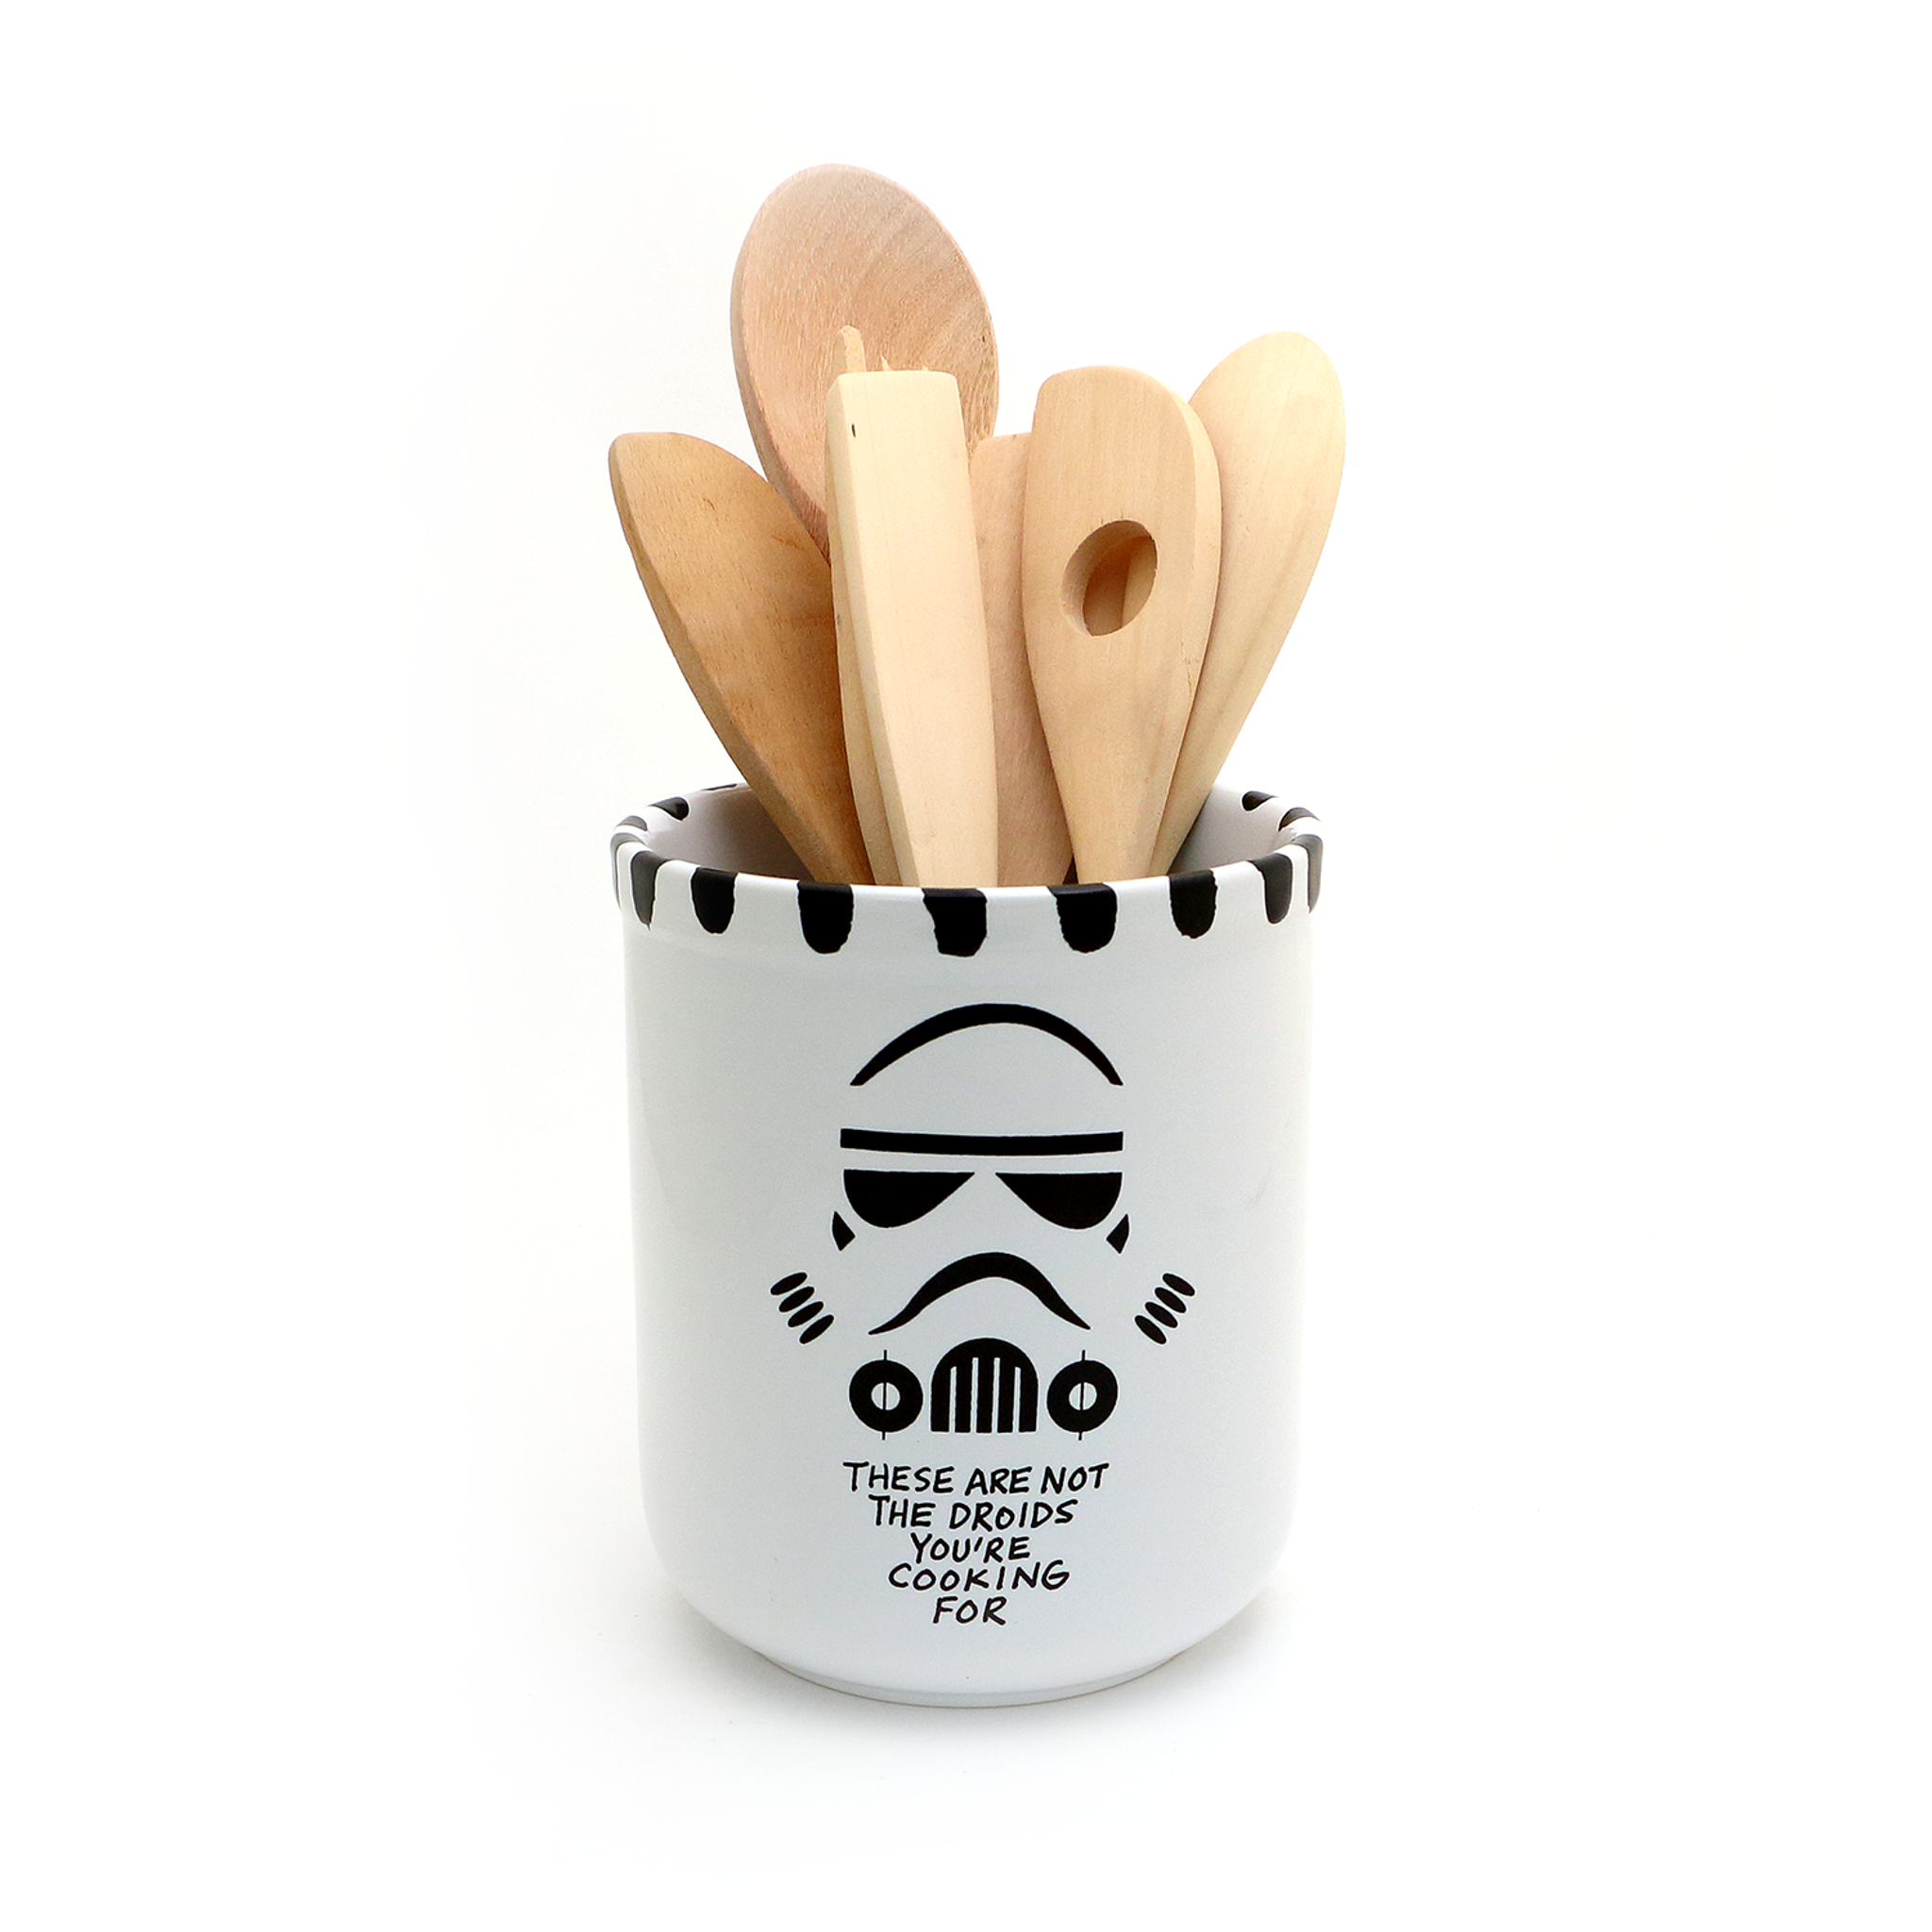  Star Wars Original Trilogy Characters Ceramic Spoon Rest Holder:  Home & Kitchen